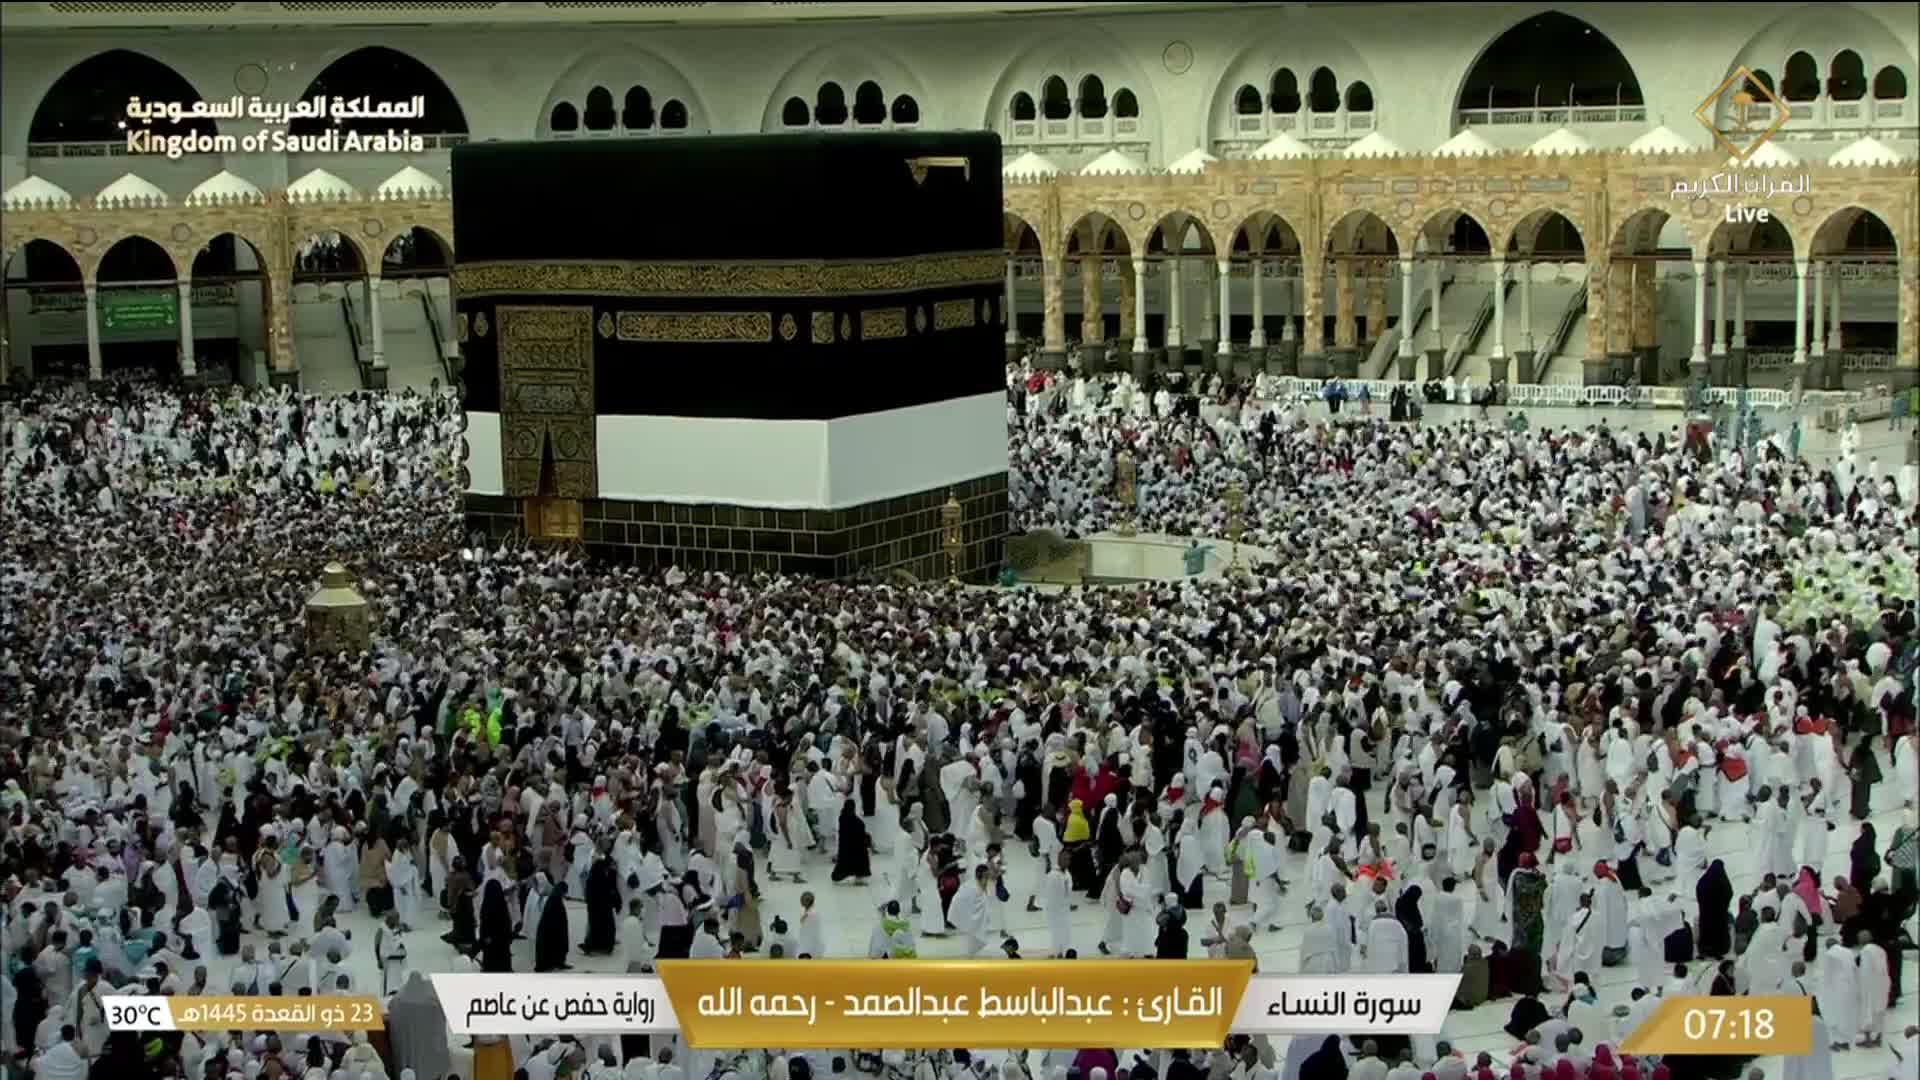 La Mecca Mer. 07:36